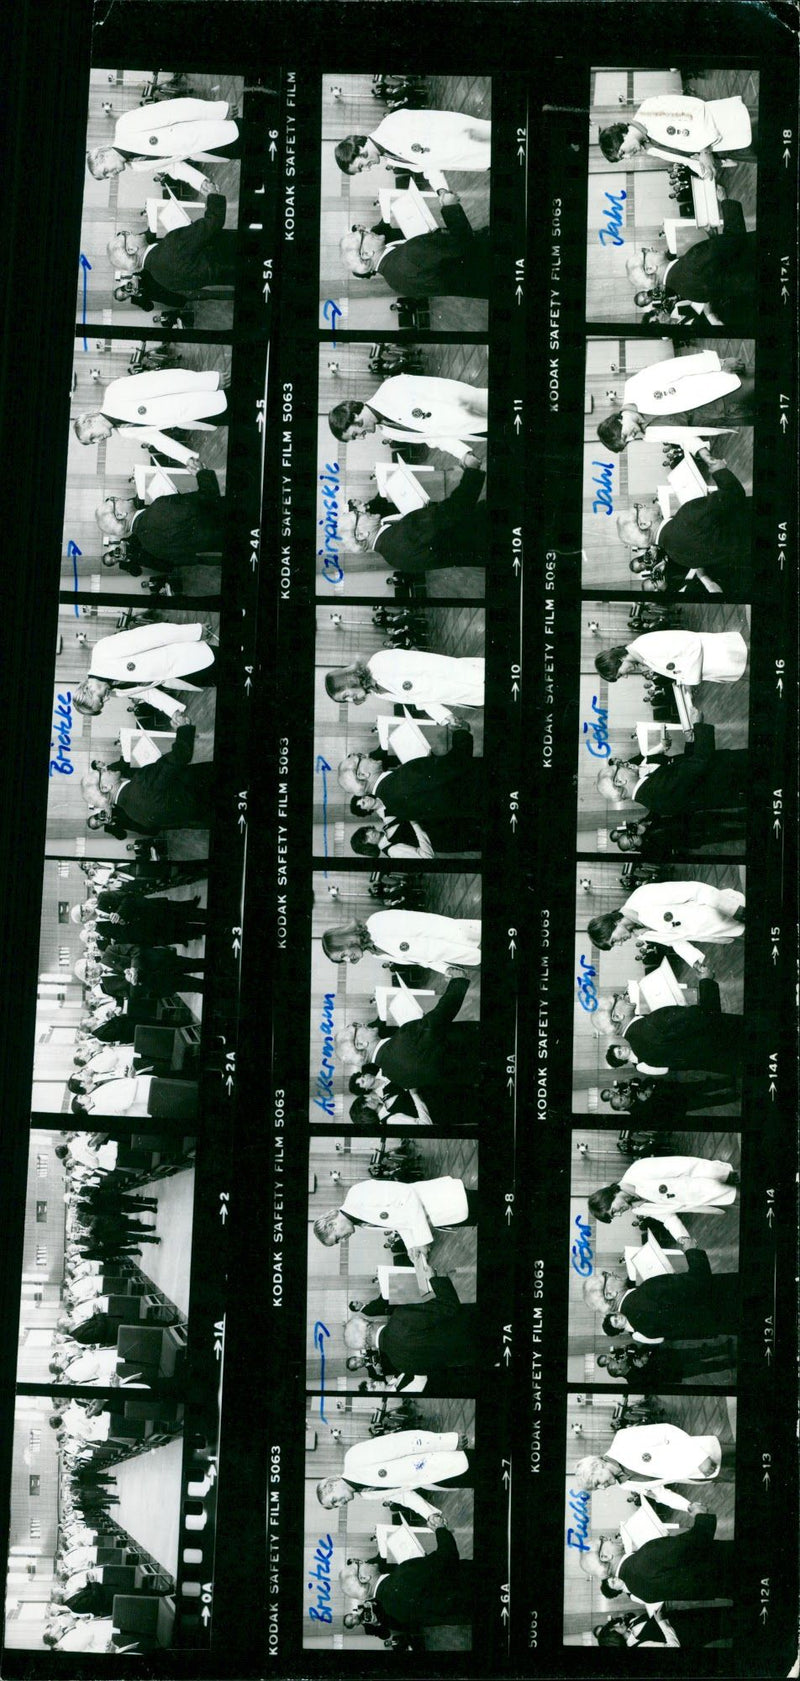 1980 YOURS KODAK SAFETY FILM JAM JAWA STEARTS RATATS AWARD FOTS - Vintage Photograph